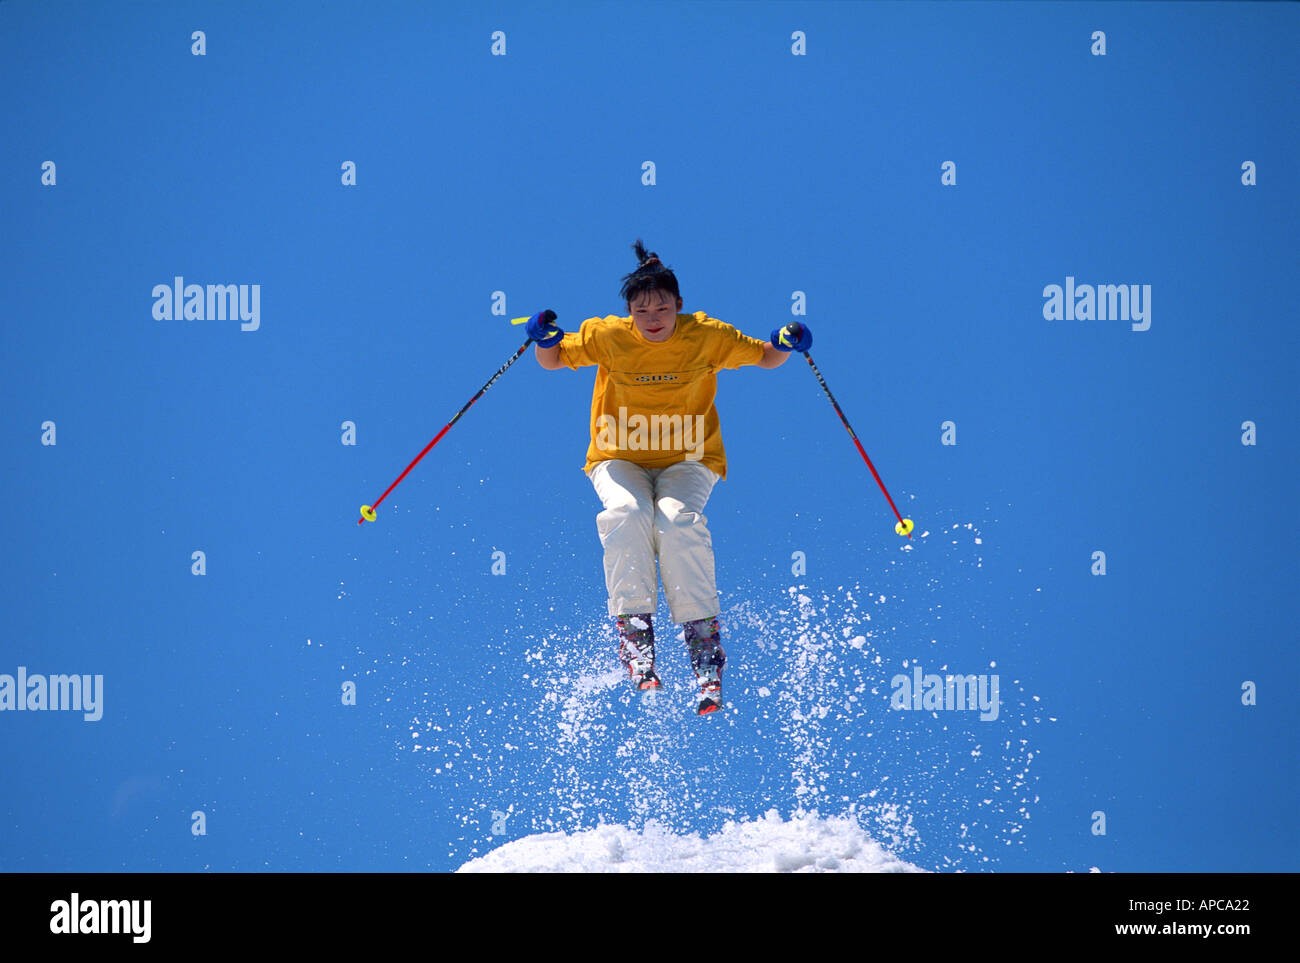 Sport Winter Sports Skiing Stock Photo